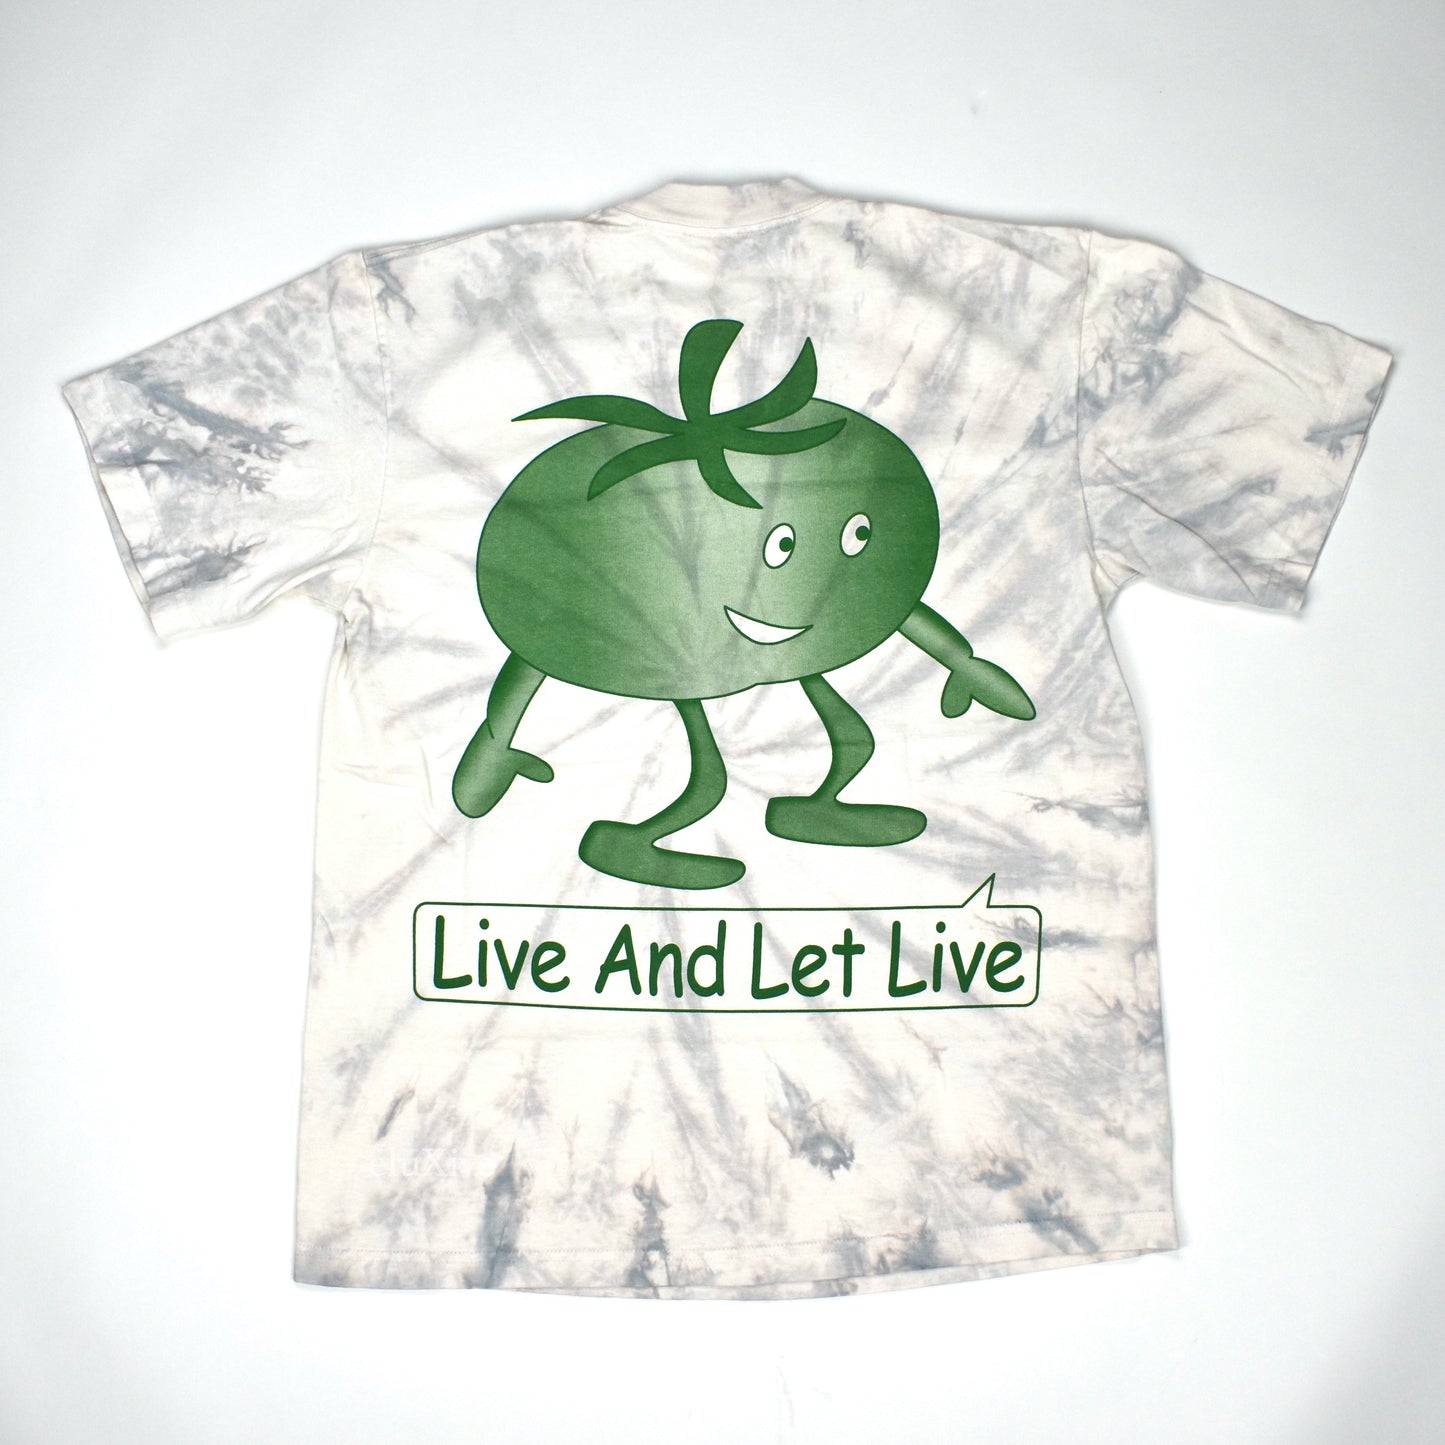 Online Ceramics - Tie-Dye Live And Let Live 'Life Insurance' T-Shirt